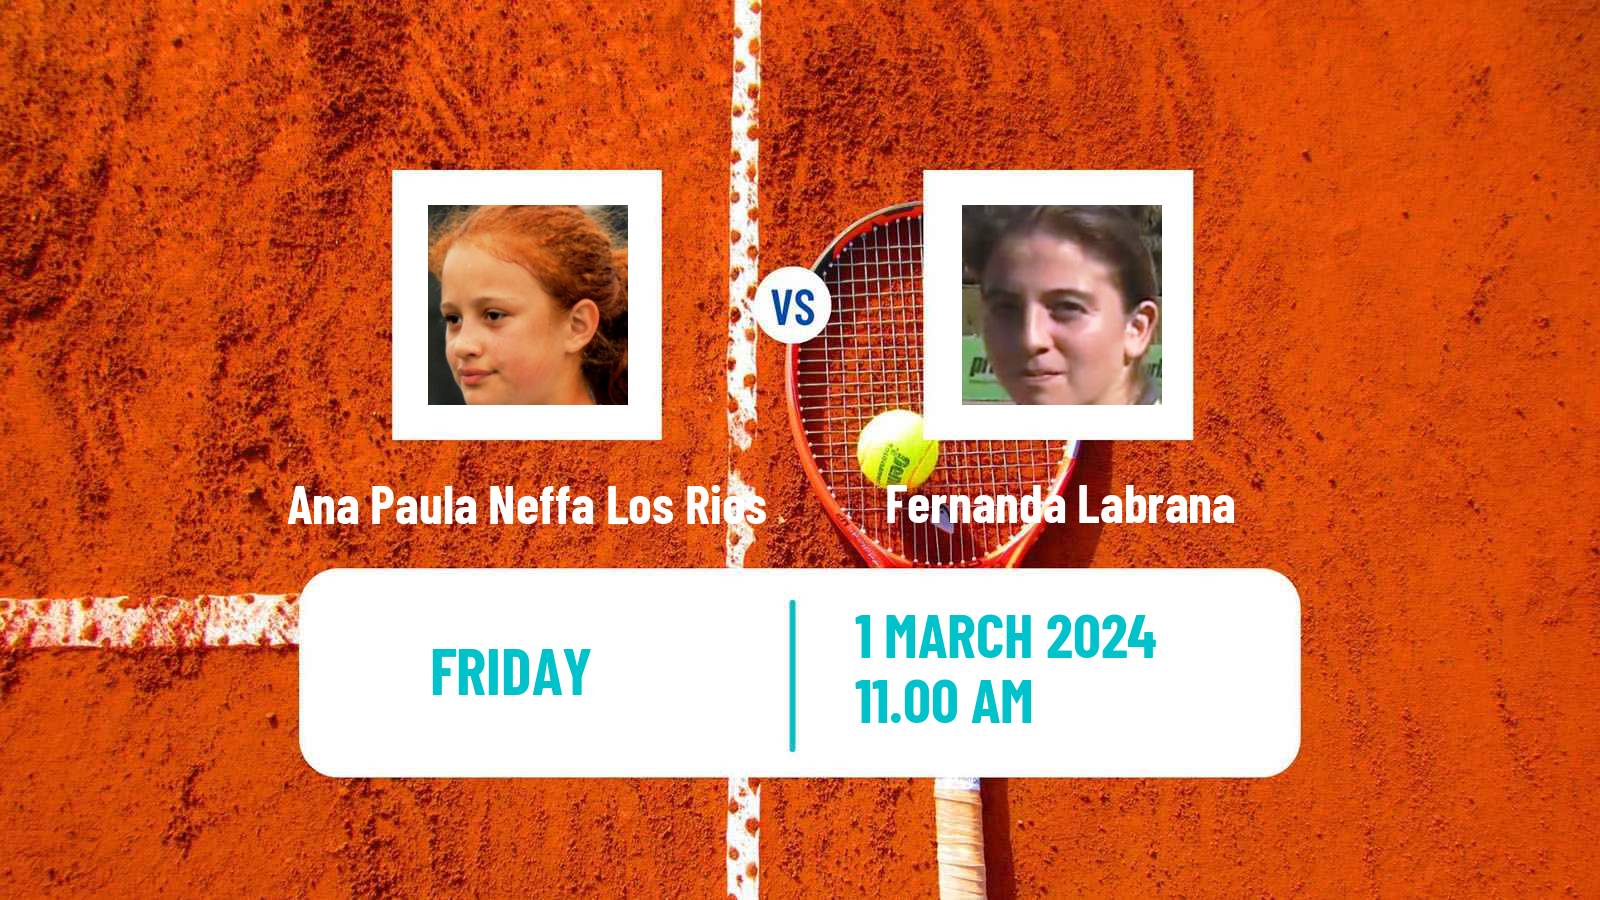 Tennis ITF W15 Tucuman Women Ana Paula Neffa Los Rios - Fernanda Labrana